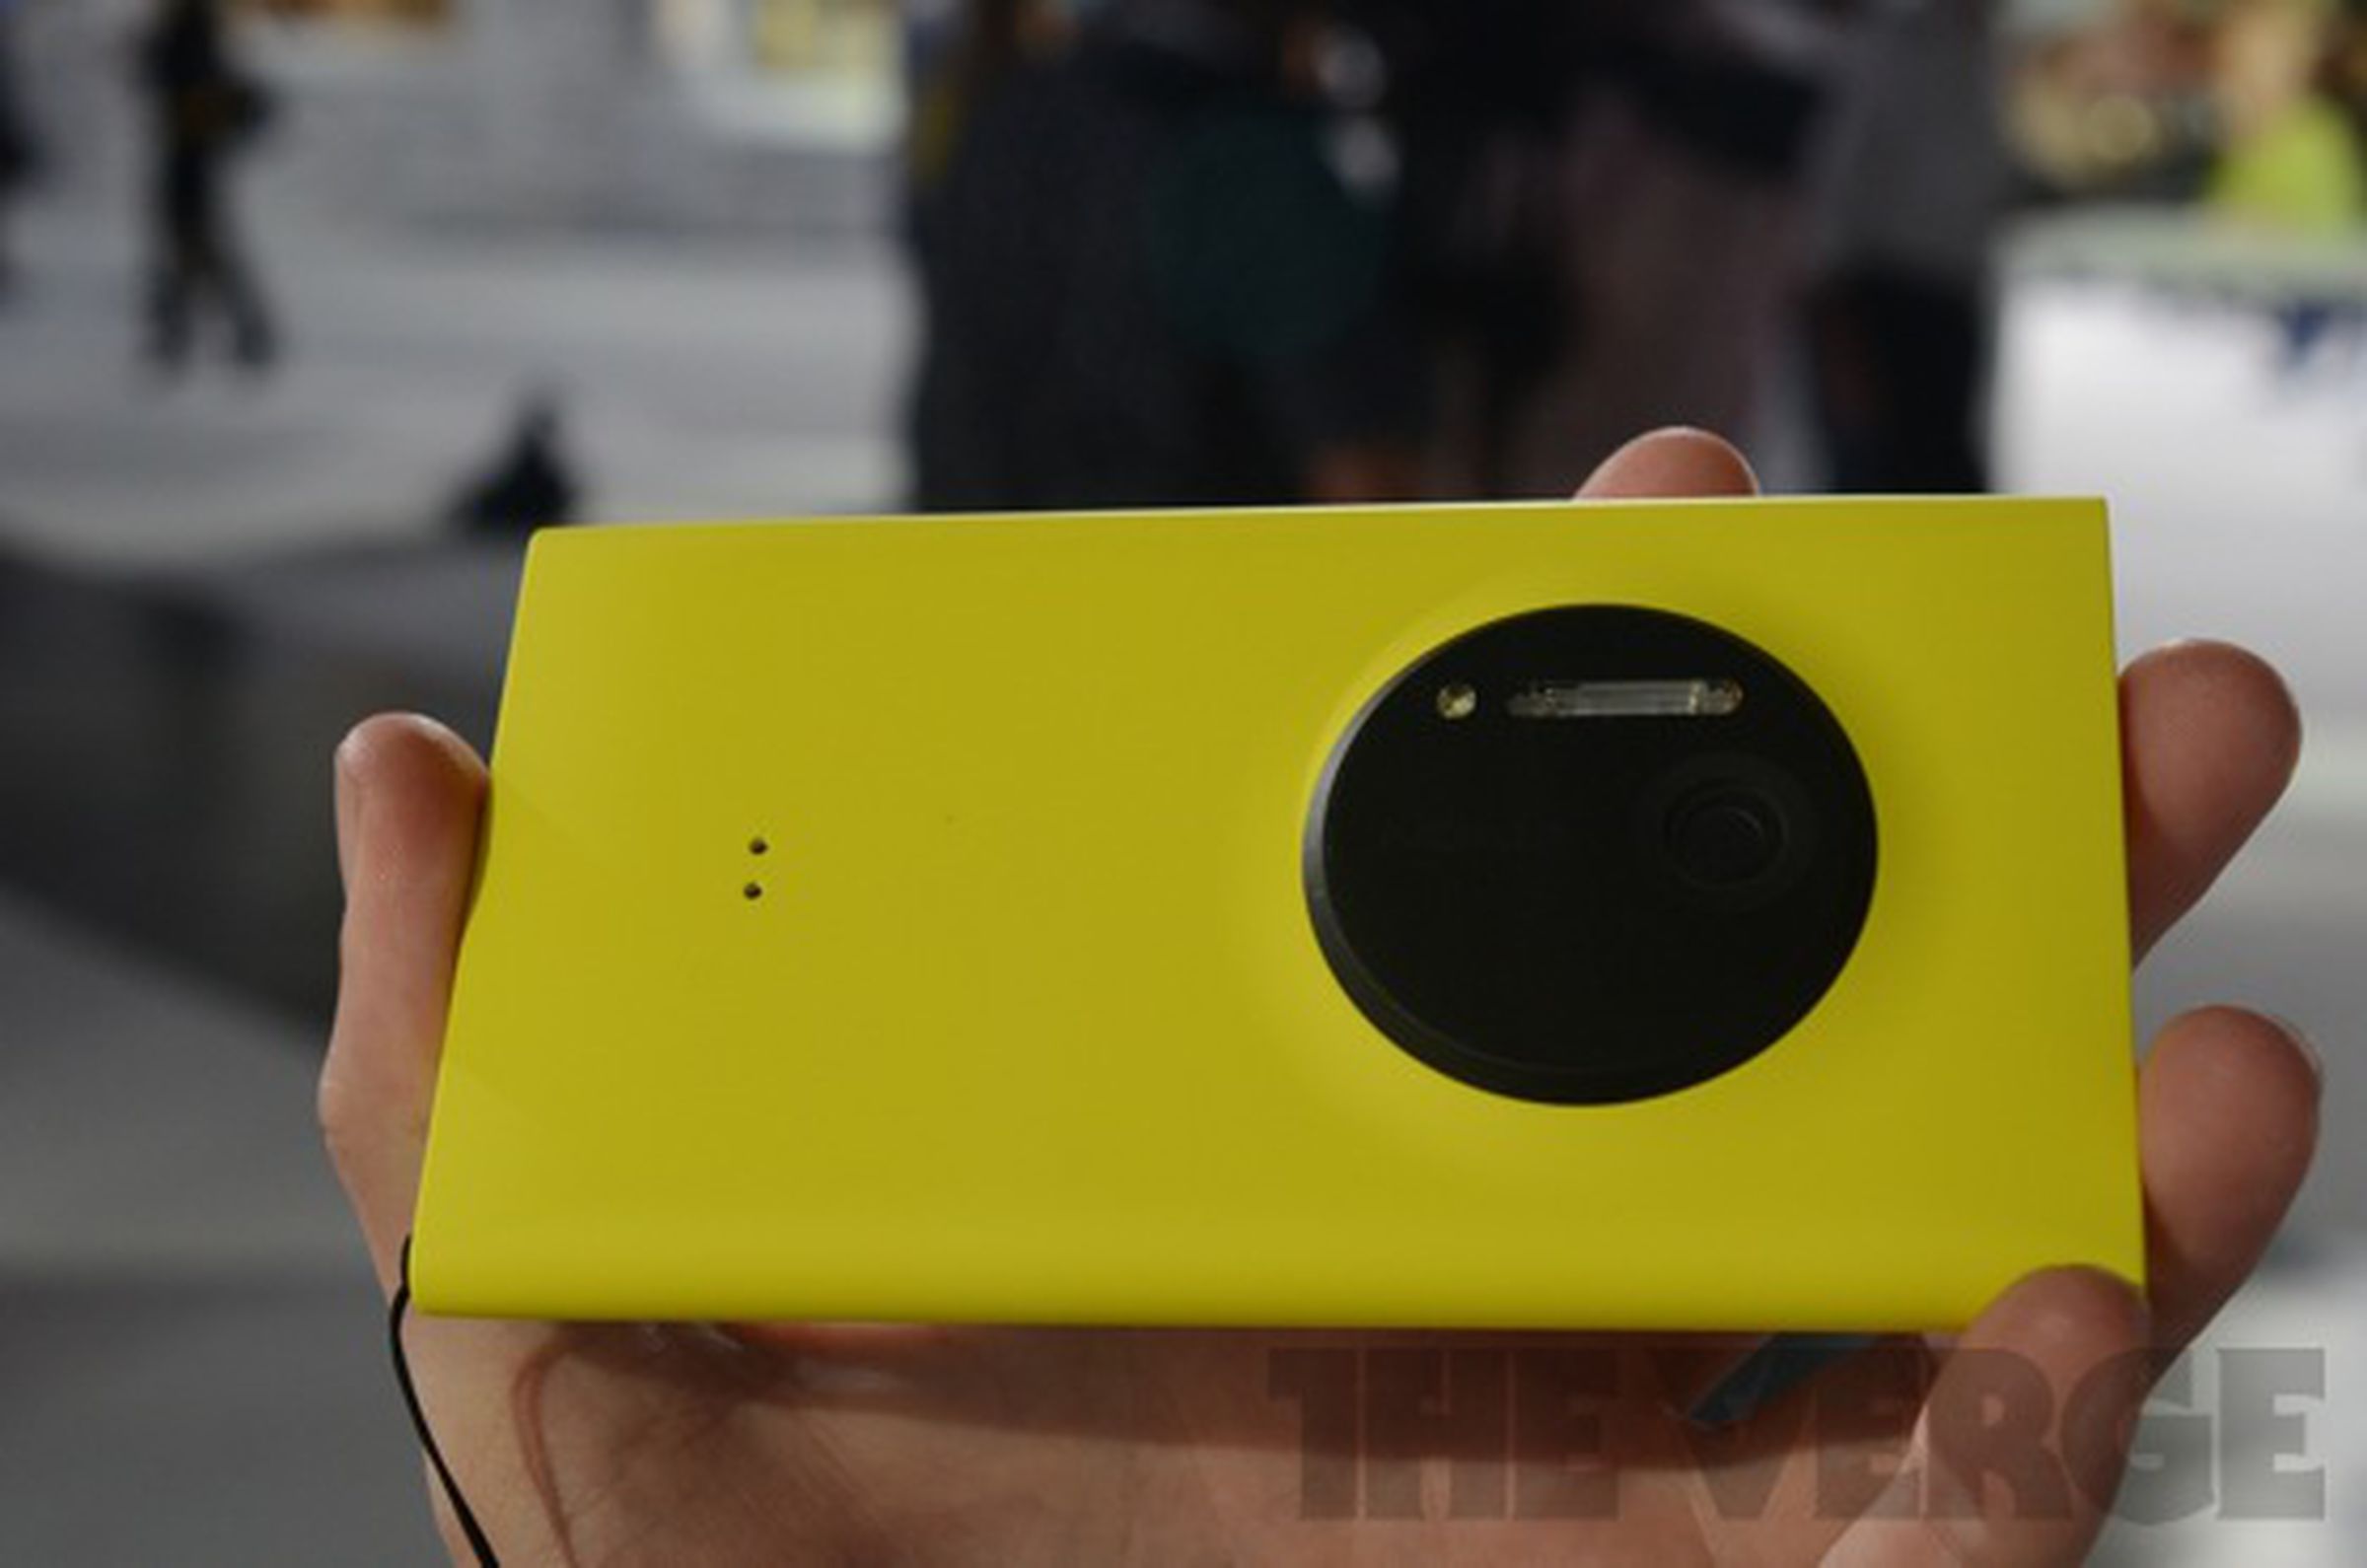 Nokia Lumia 1020 hands-on photos